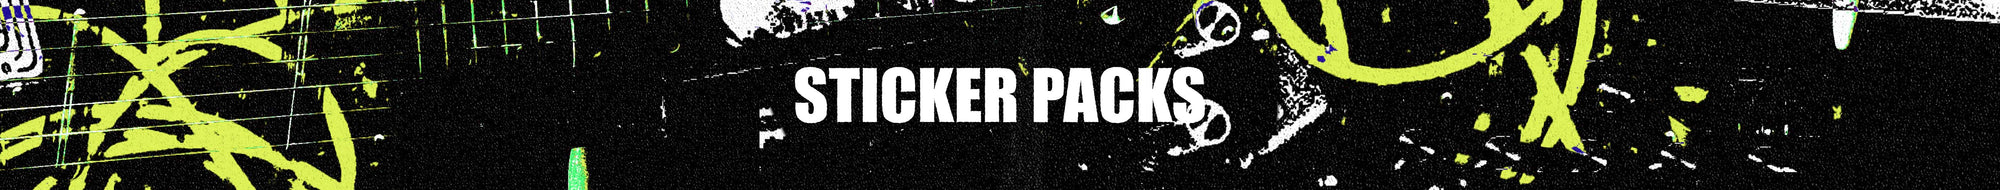 STICKER PACKS